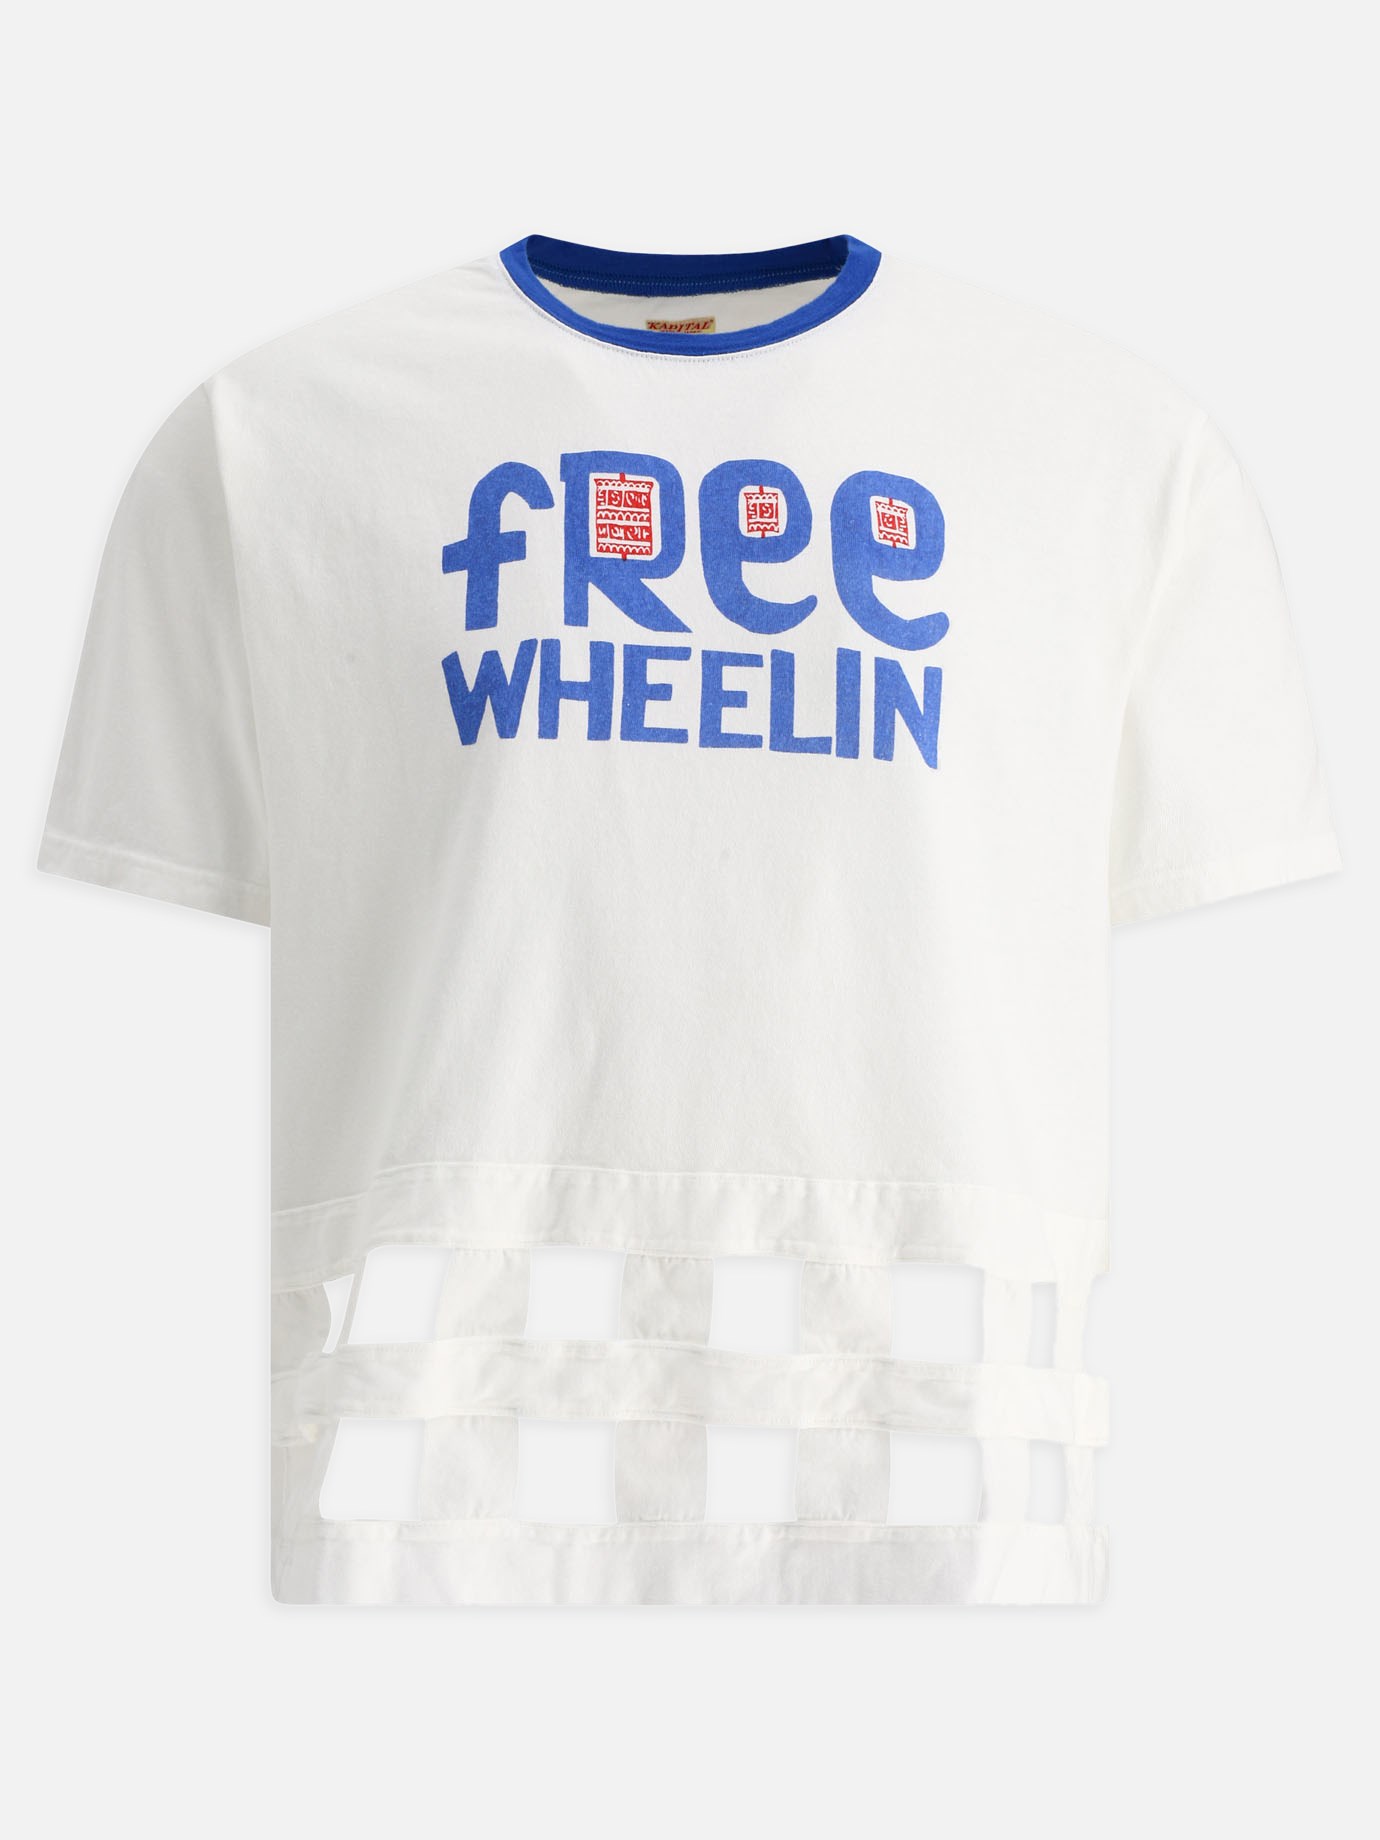  Free Wheelin  t-shirtby Kapital - 1